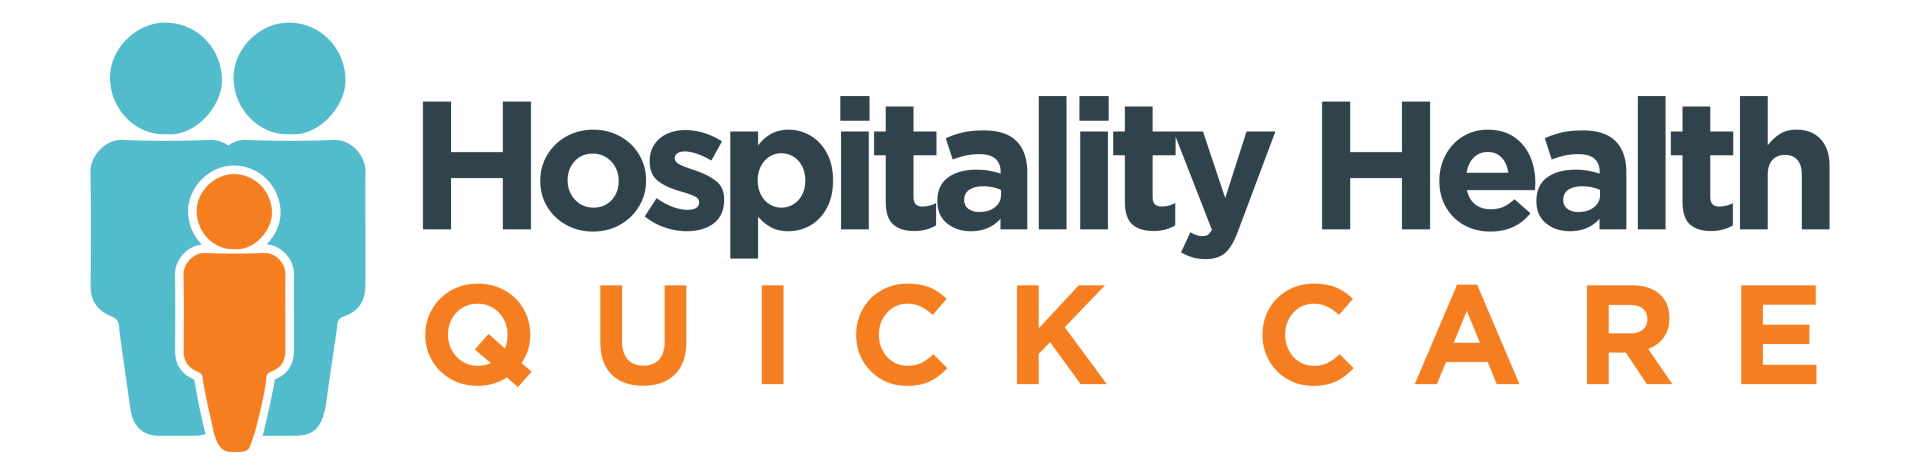 Hospitality Health Quick Care logo